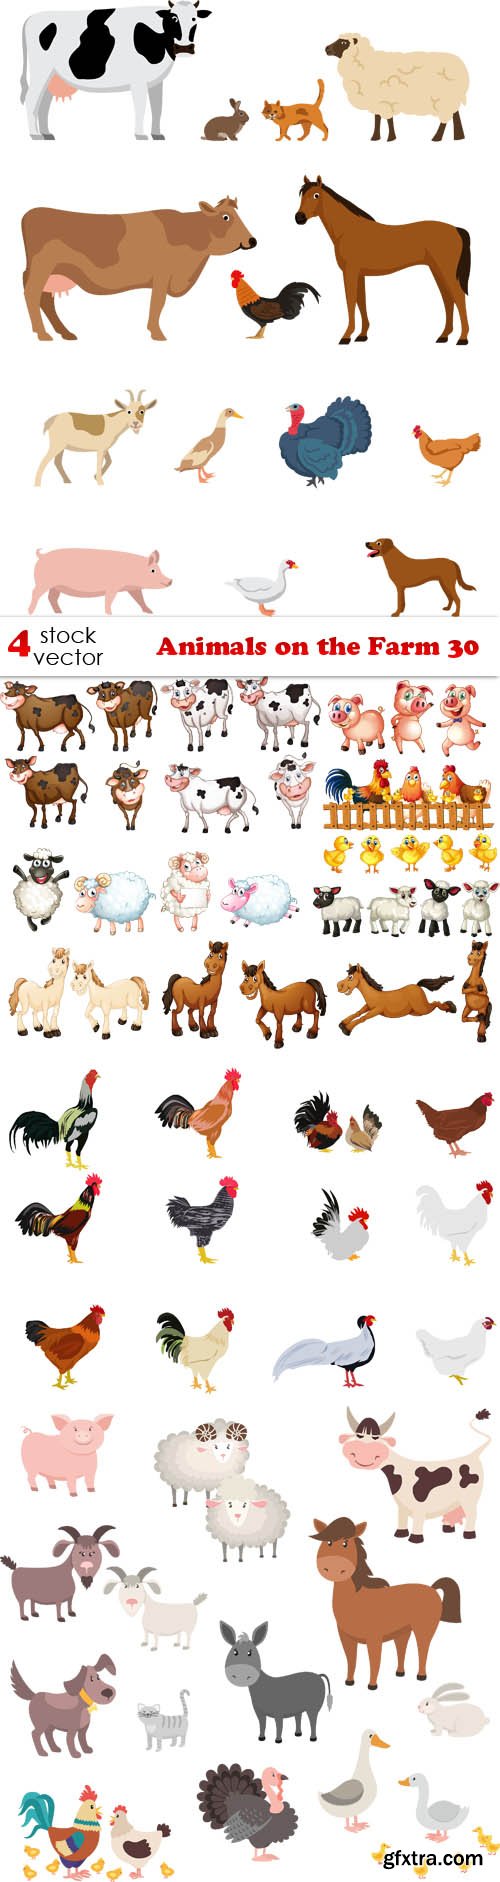 Vectors - Animals on the Farm 30